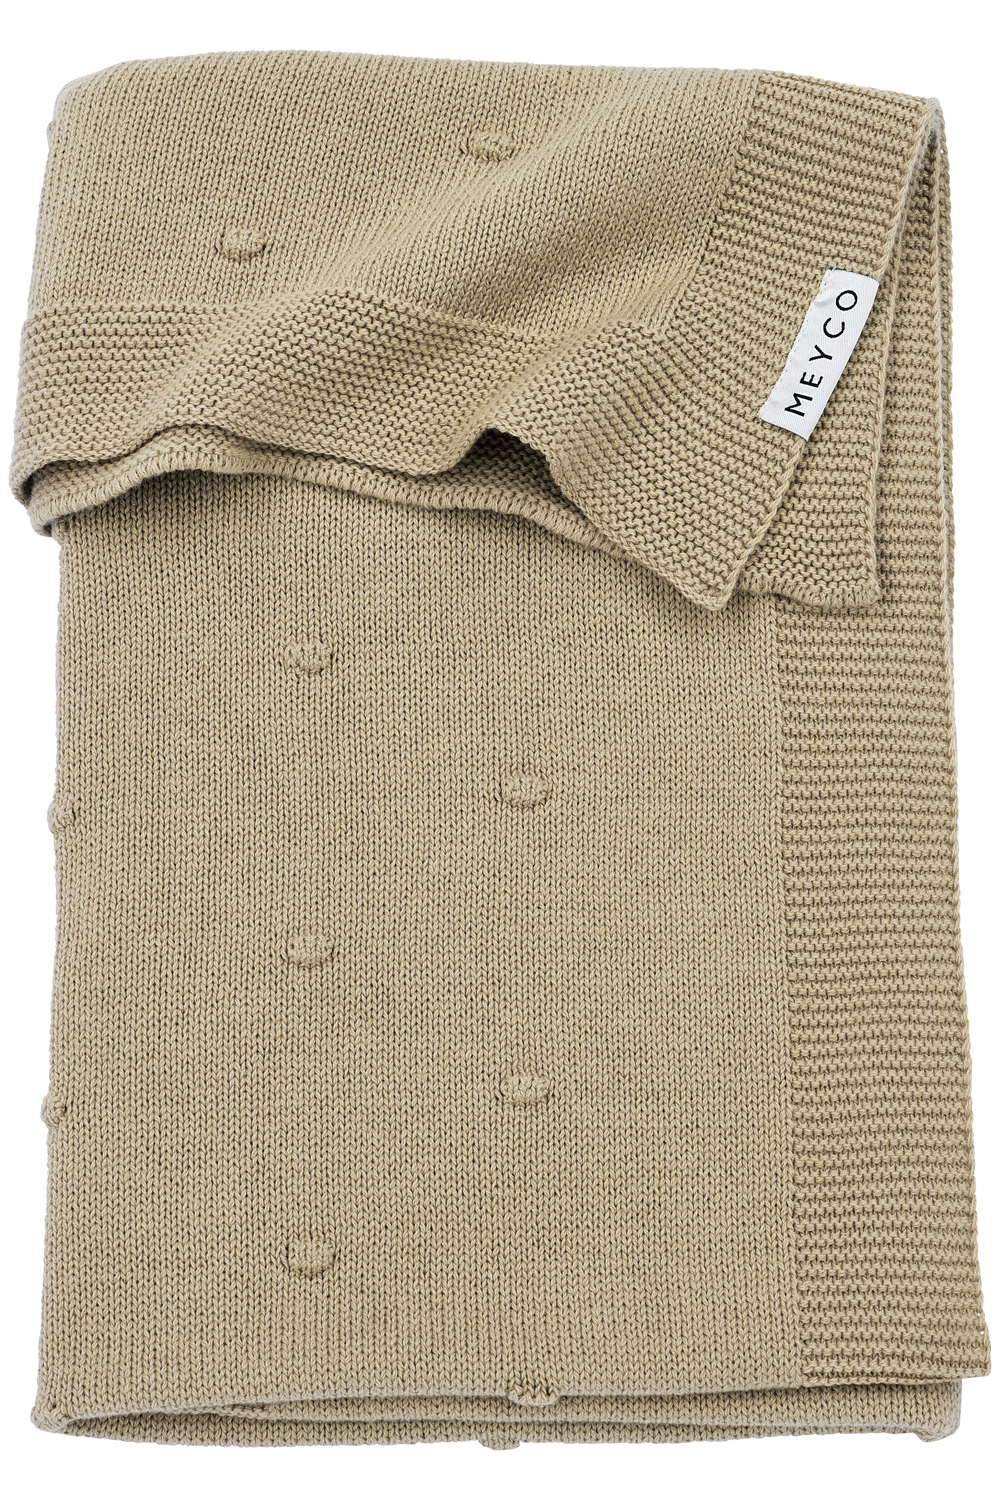 Cot Bed Blanket Mini Knots - Sand - 100x150cm